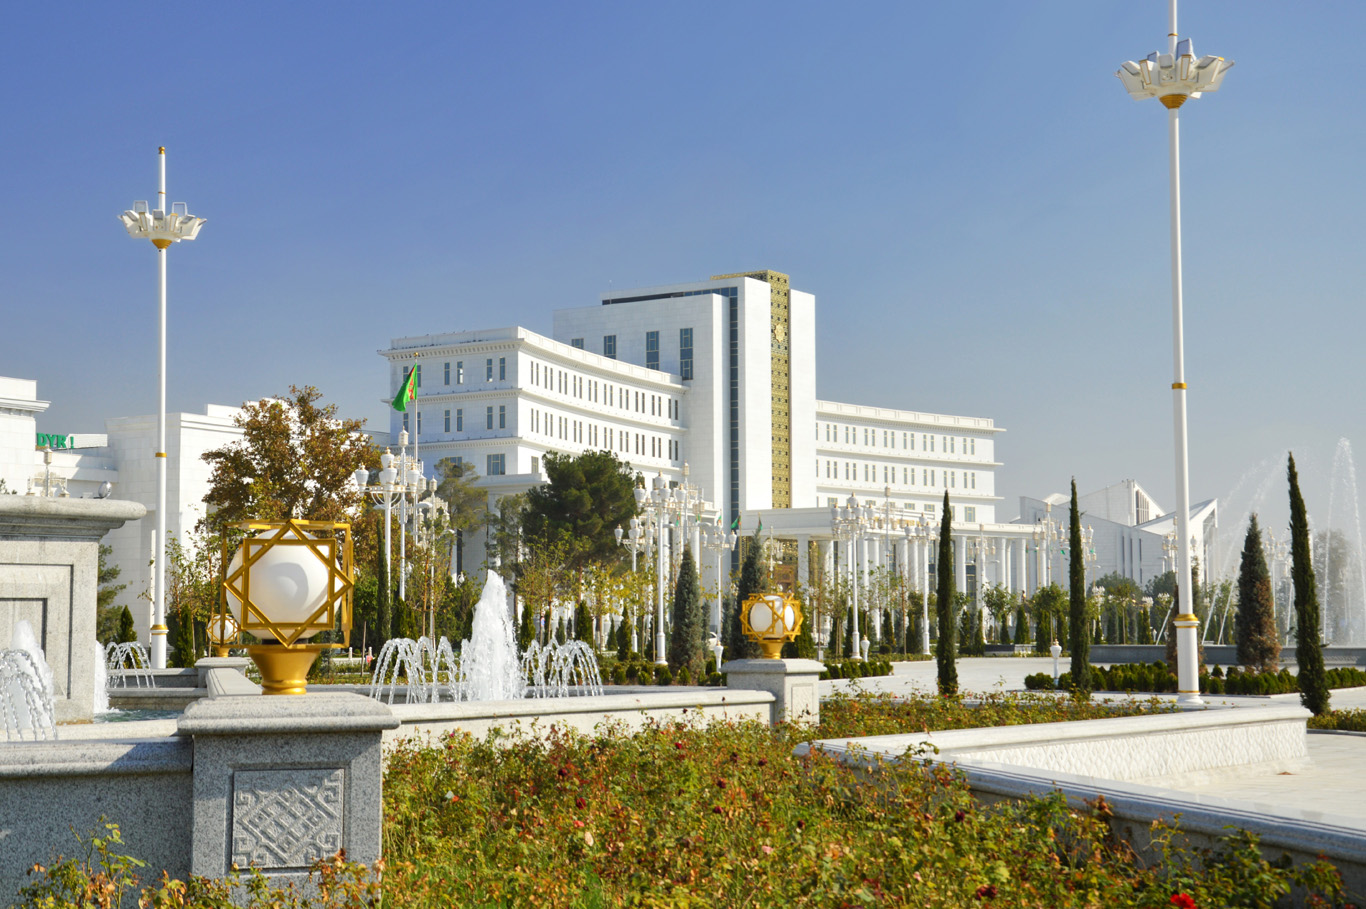 Туркменабад сегодня. Площадь независимости (Ашхабад). Туркмения столица Ашхабад. Беломраморный Ашхабад. Здание правительства Туркменистана.